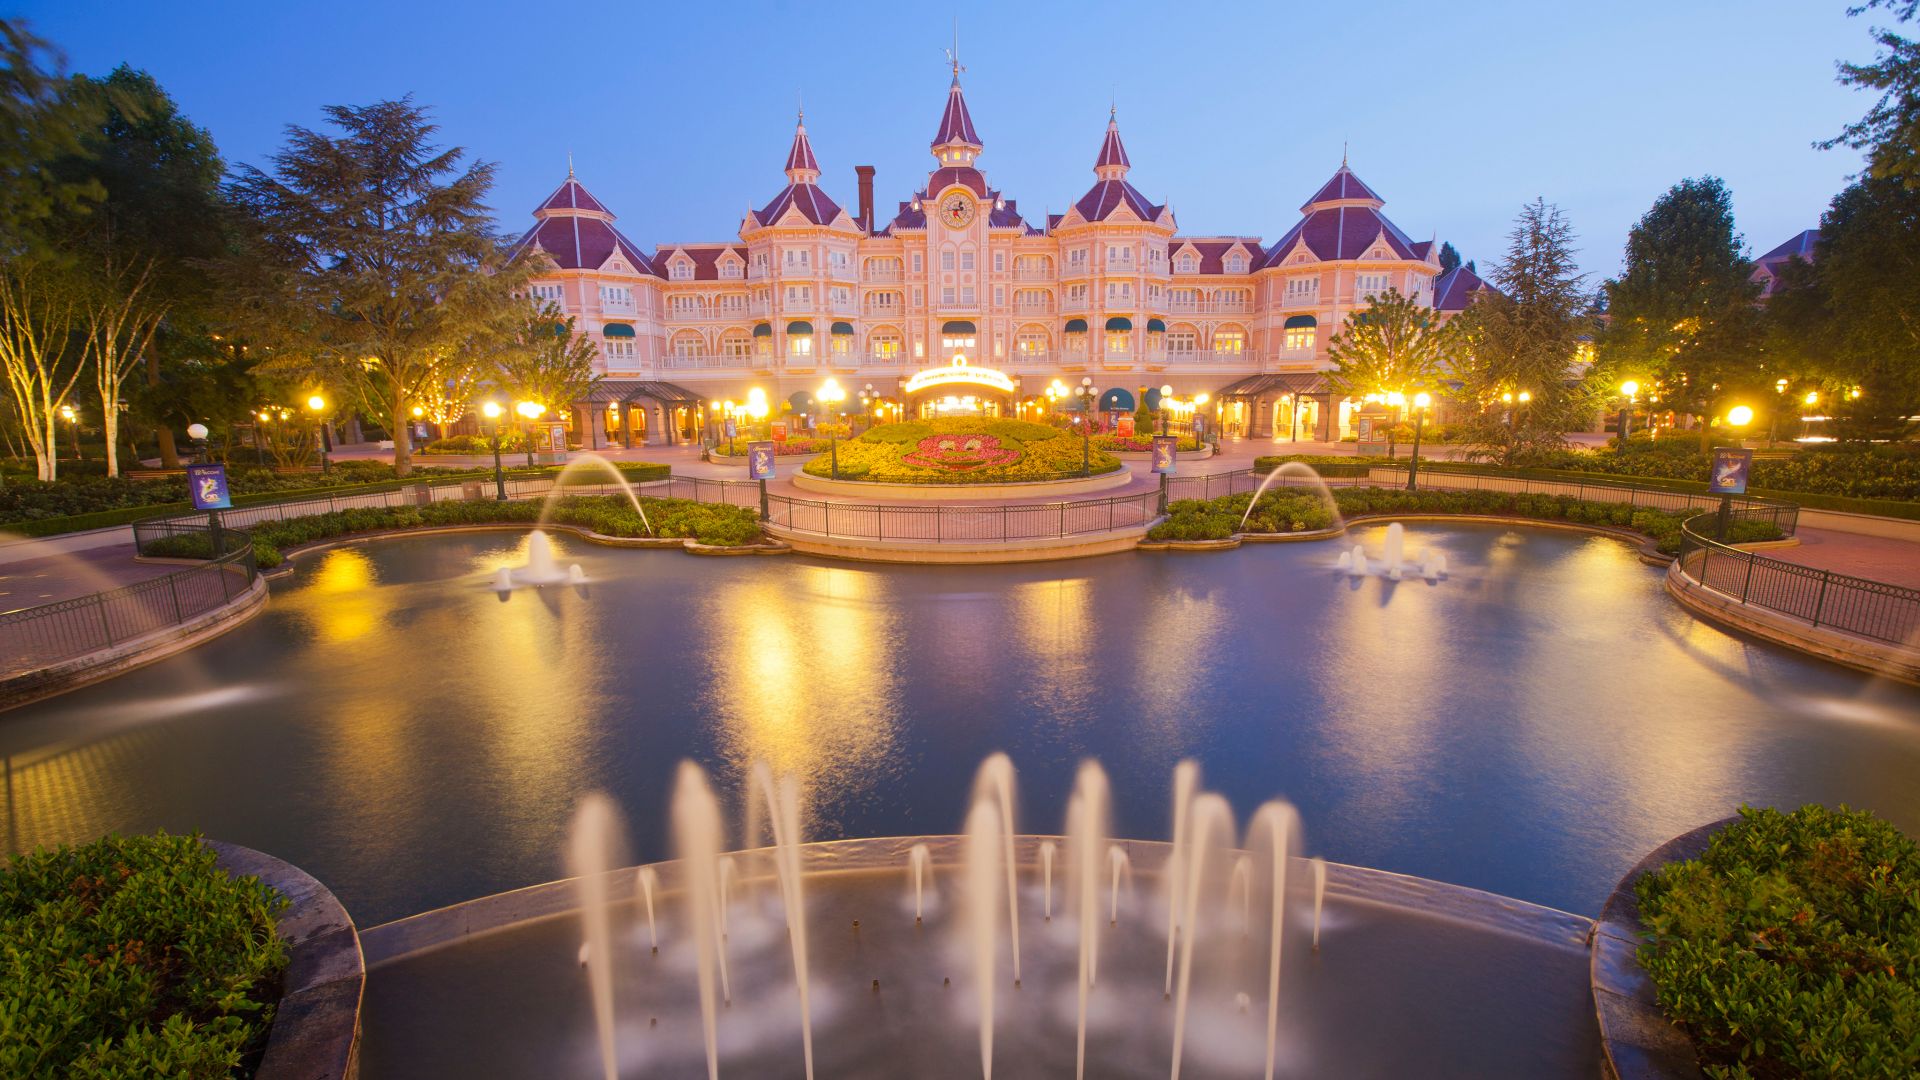 Disneyland Hotel, Paris, France, Europe, fountain, 4k (horizontal)